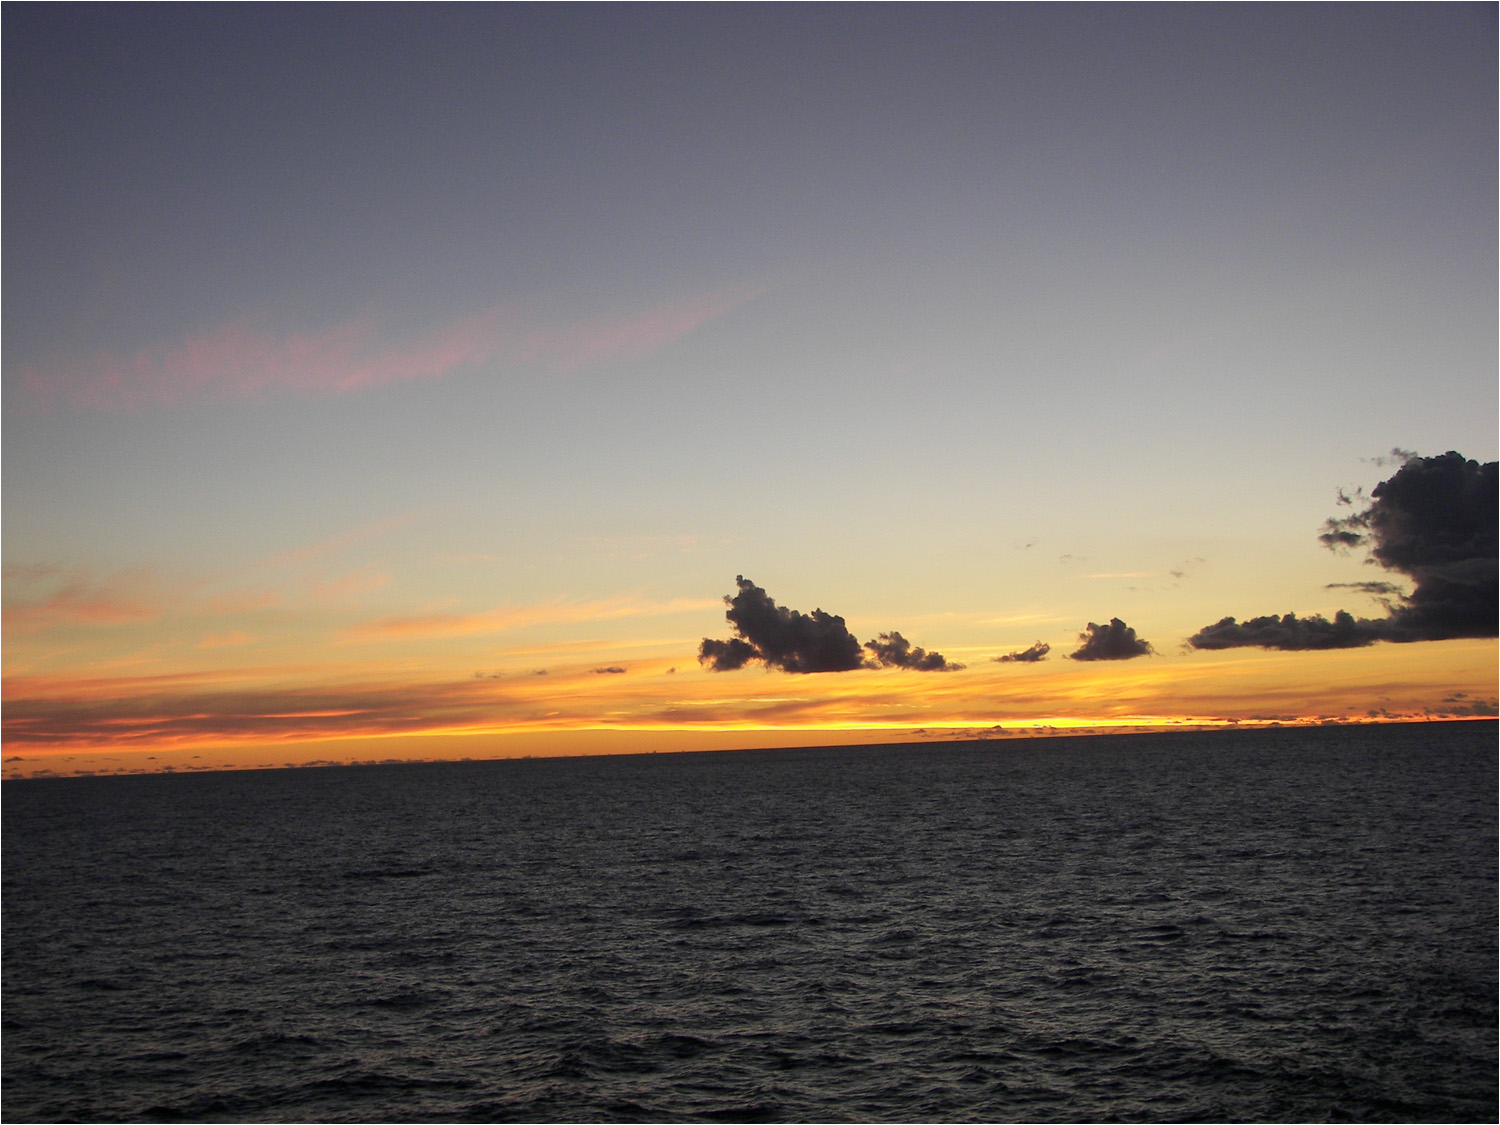 Sunset Sunday evening between Moorea and Tahiti